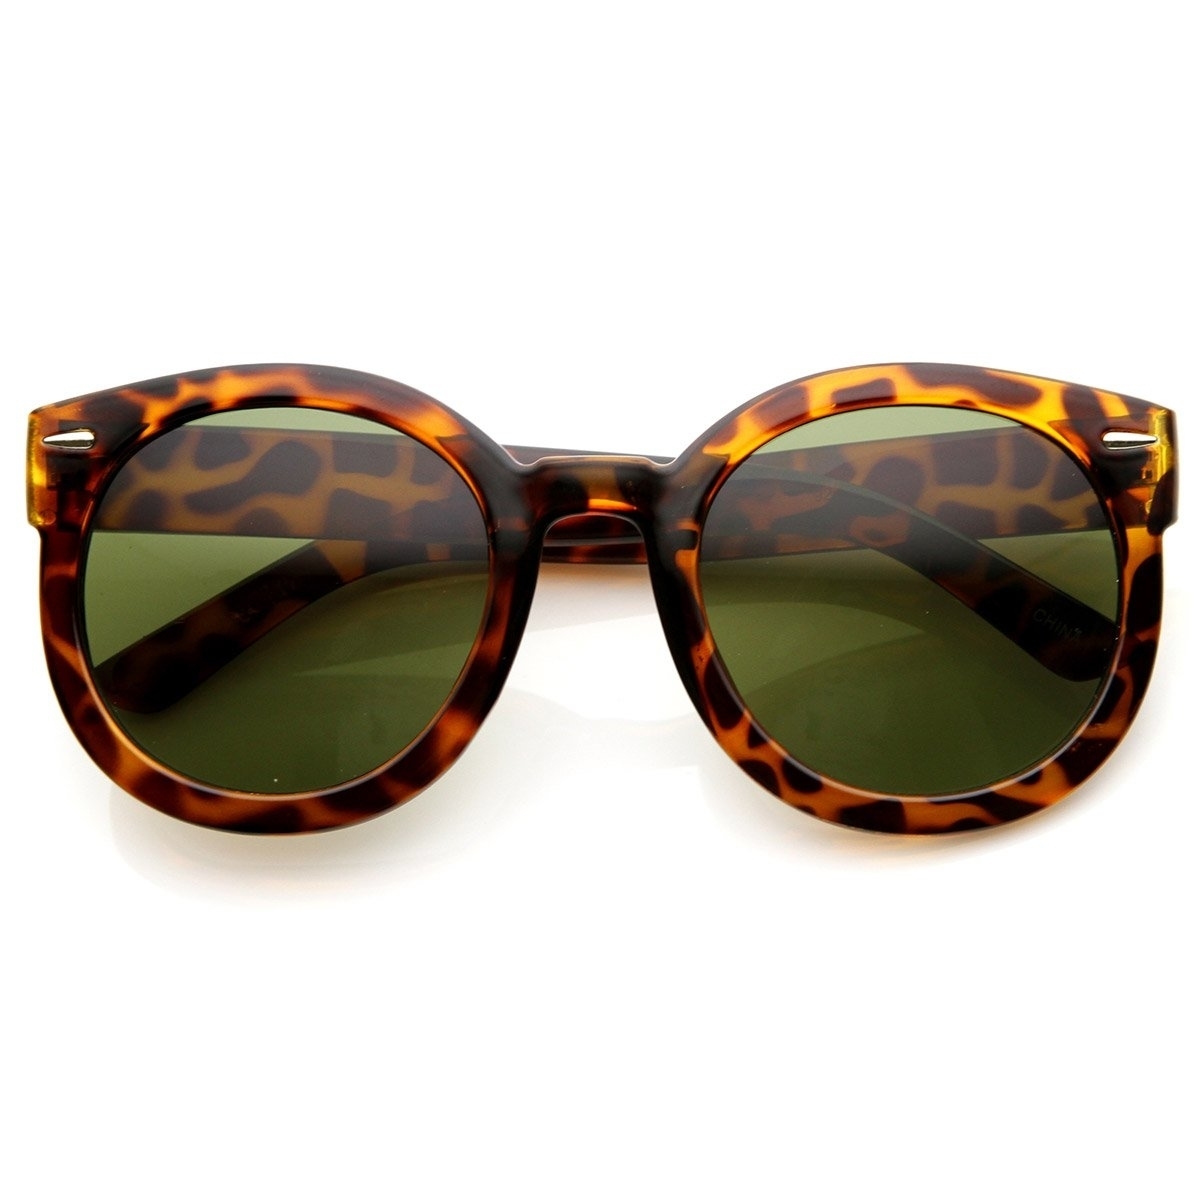 Womens Plastic Sunglasses Oversized Retro Style With Metal Rivets - Havana Green